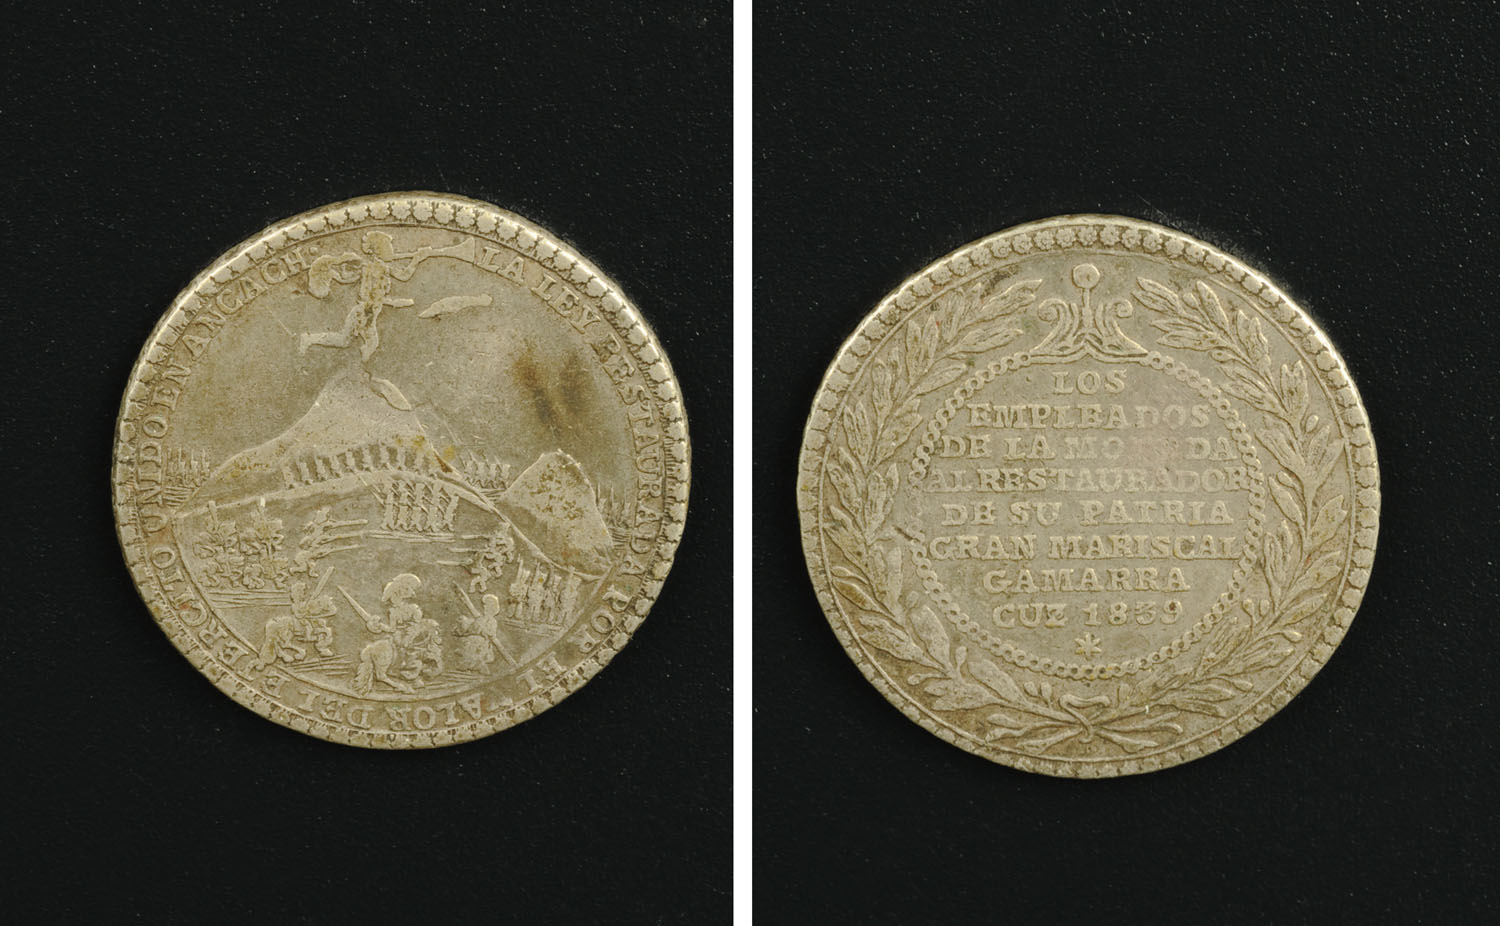 Peru, Gran Mariscal Gamarra, 1839 Proclamation silver 4 reales coin, Obv.